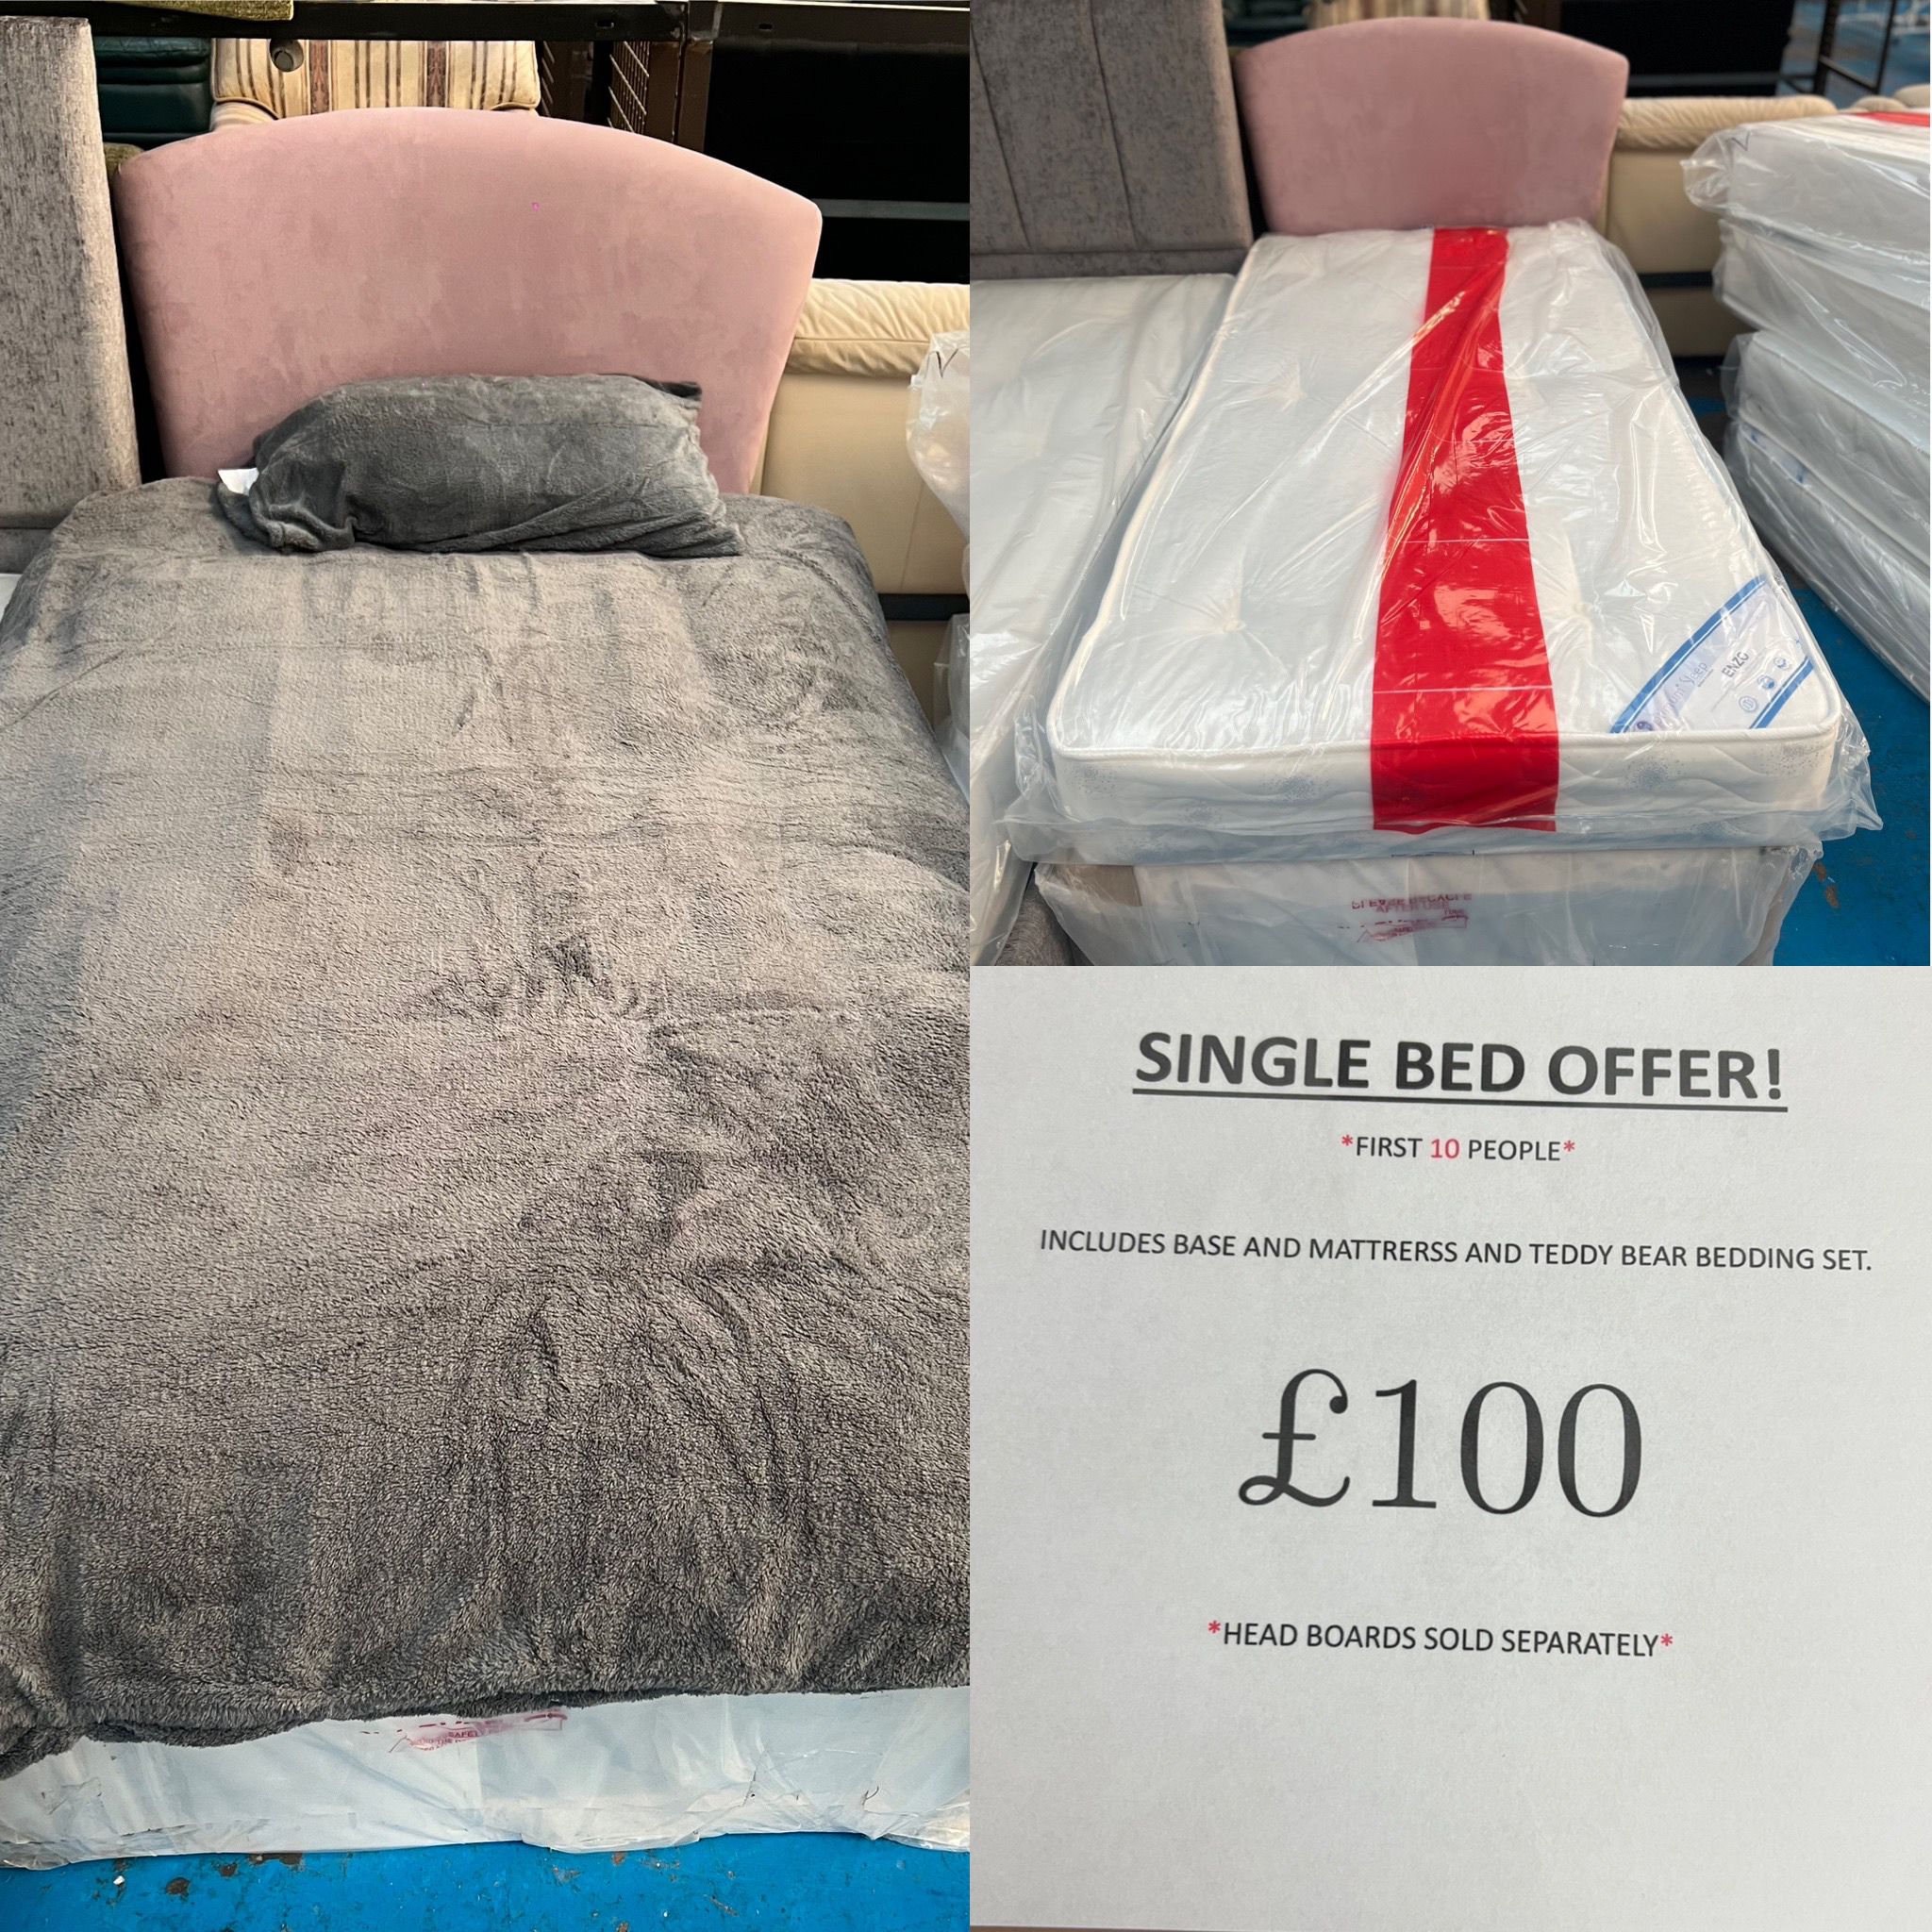 Bed Sale Image